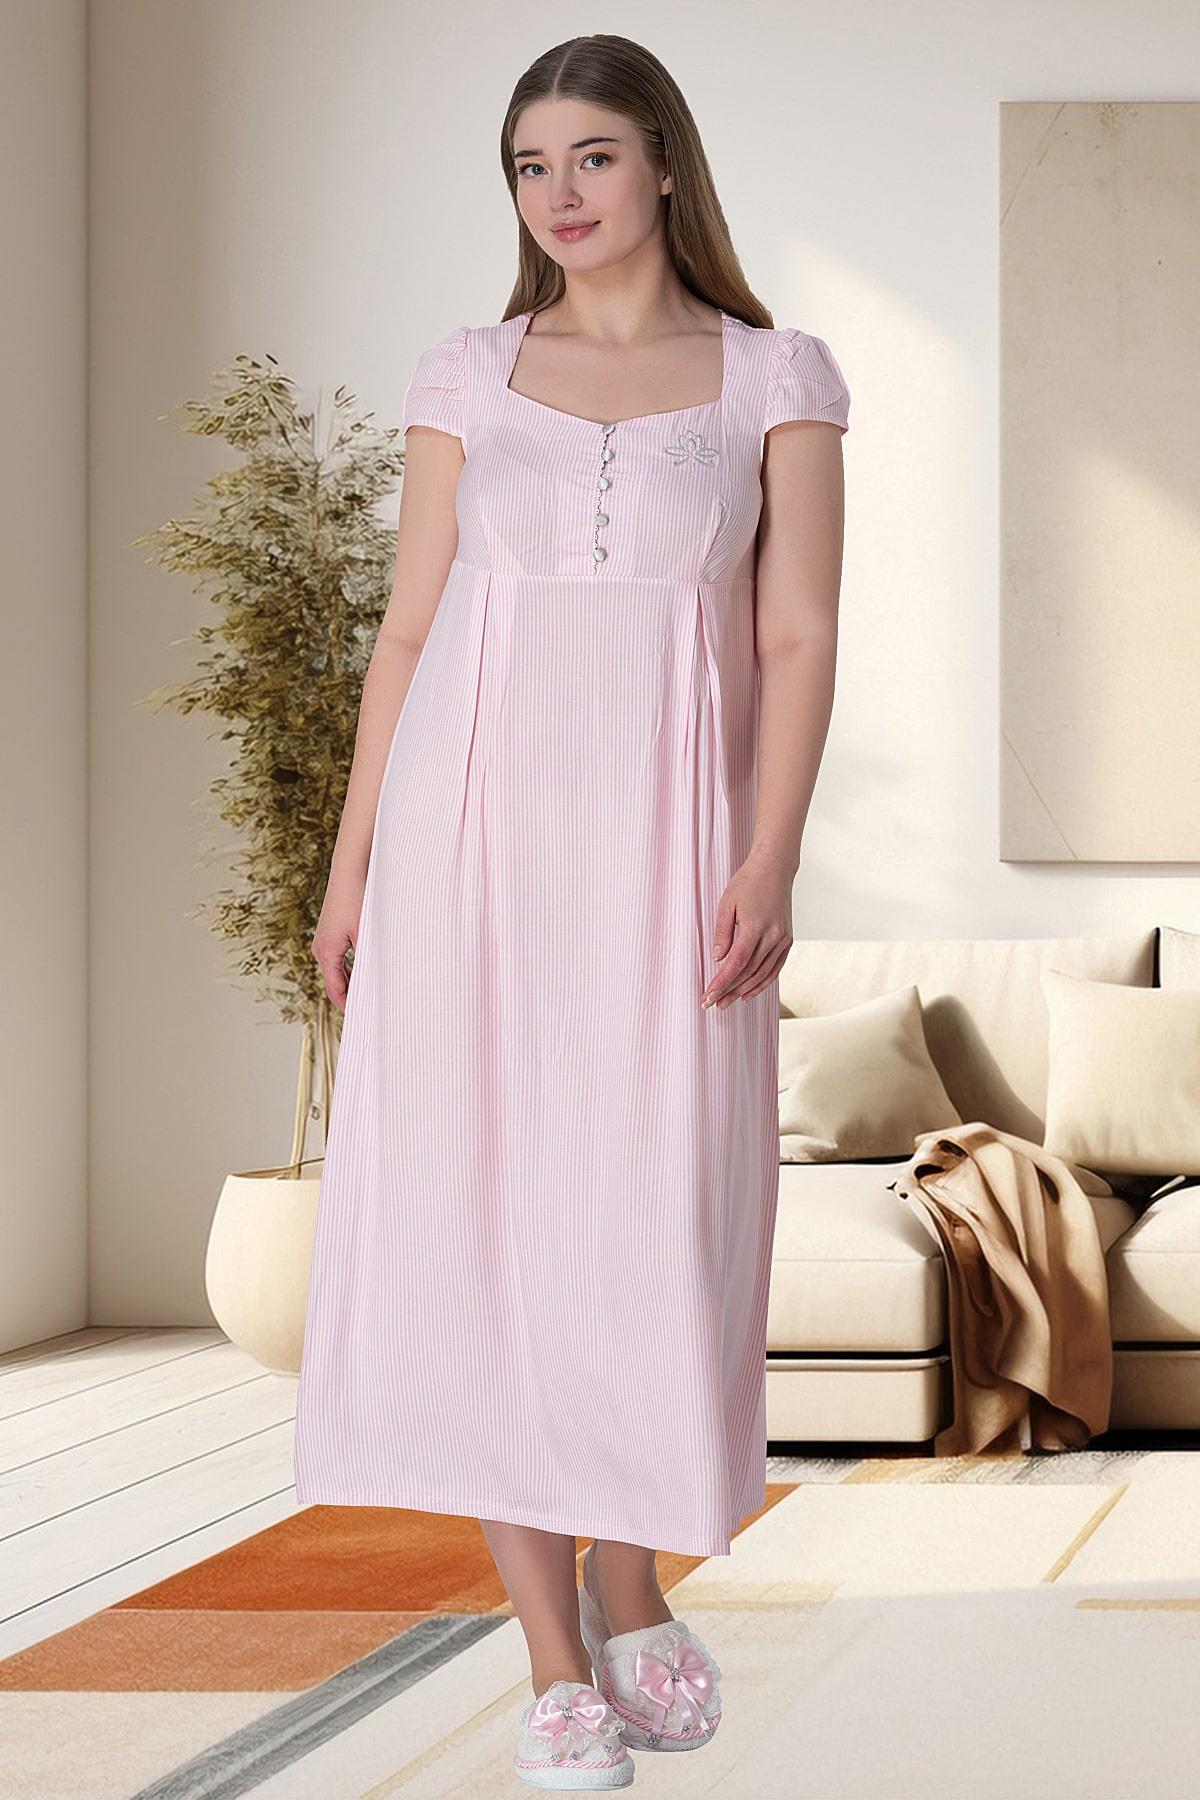 Shopymommy 6052 Striped Maternity & Nursing Nightgown Pink